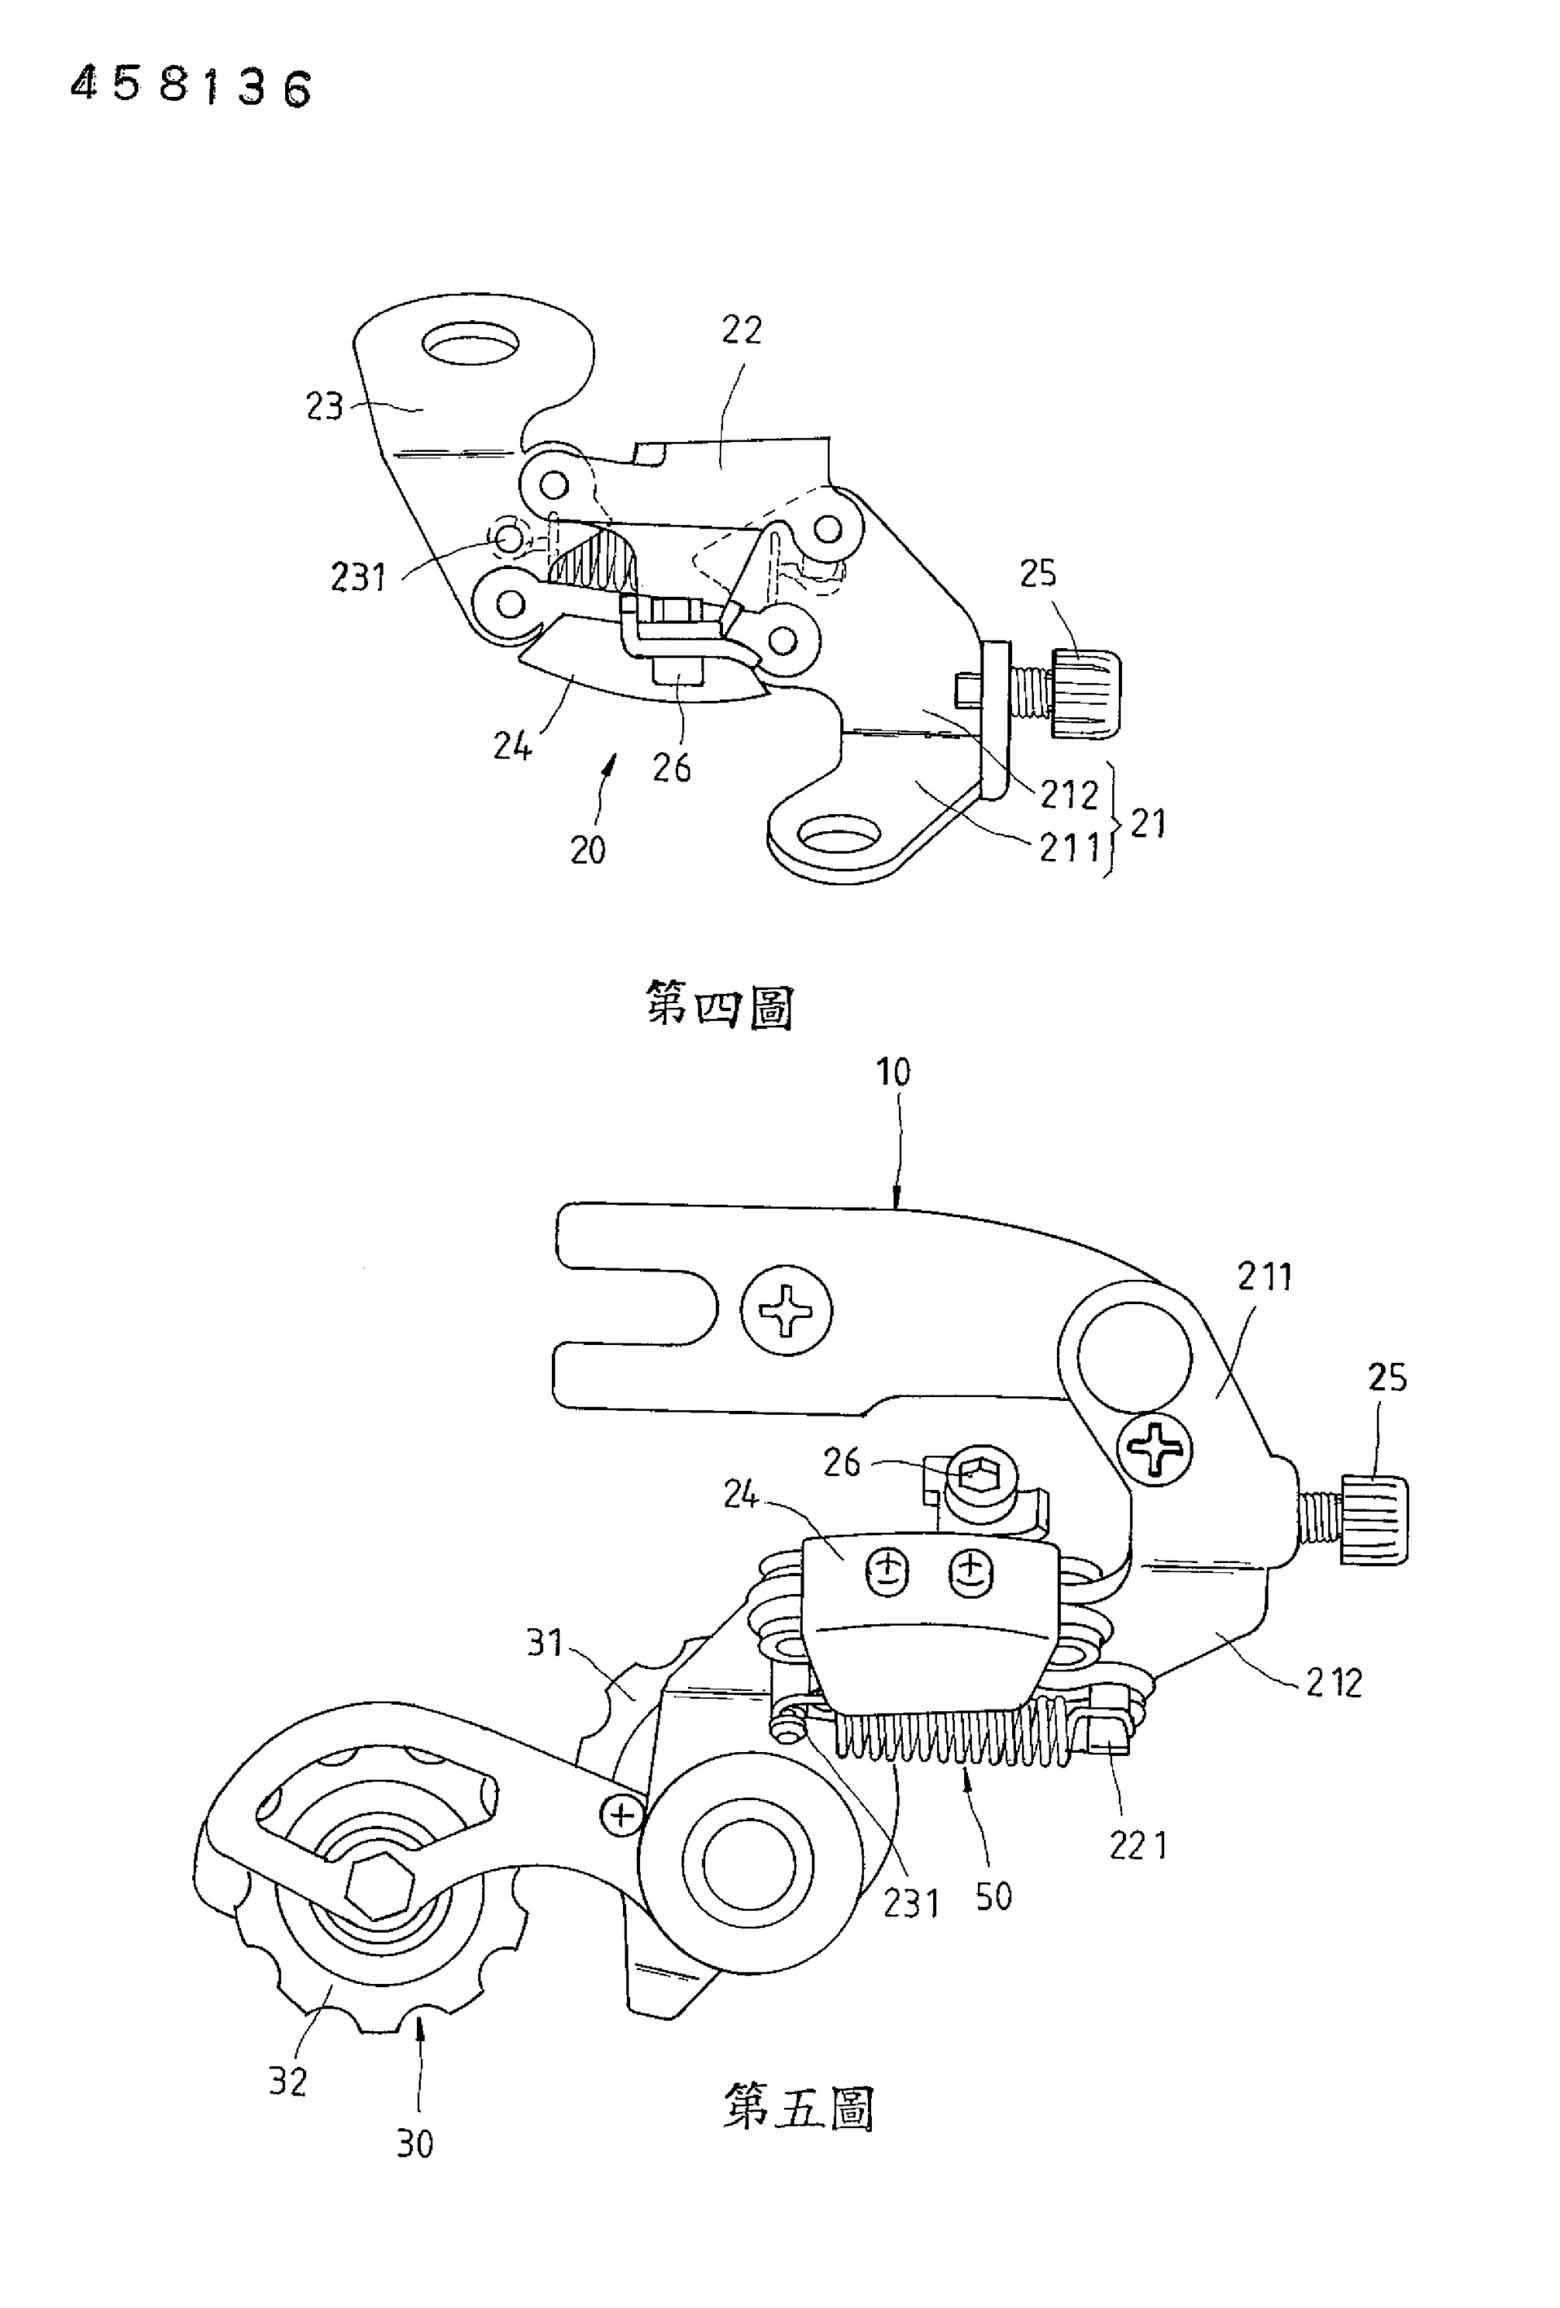 Taiwan patent 458,136 - Falcon scan 17 main image